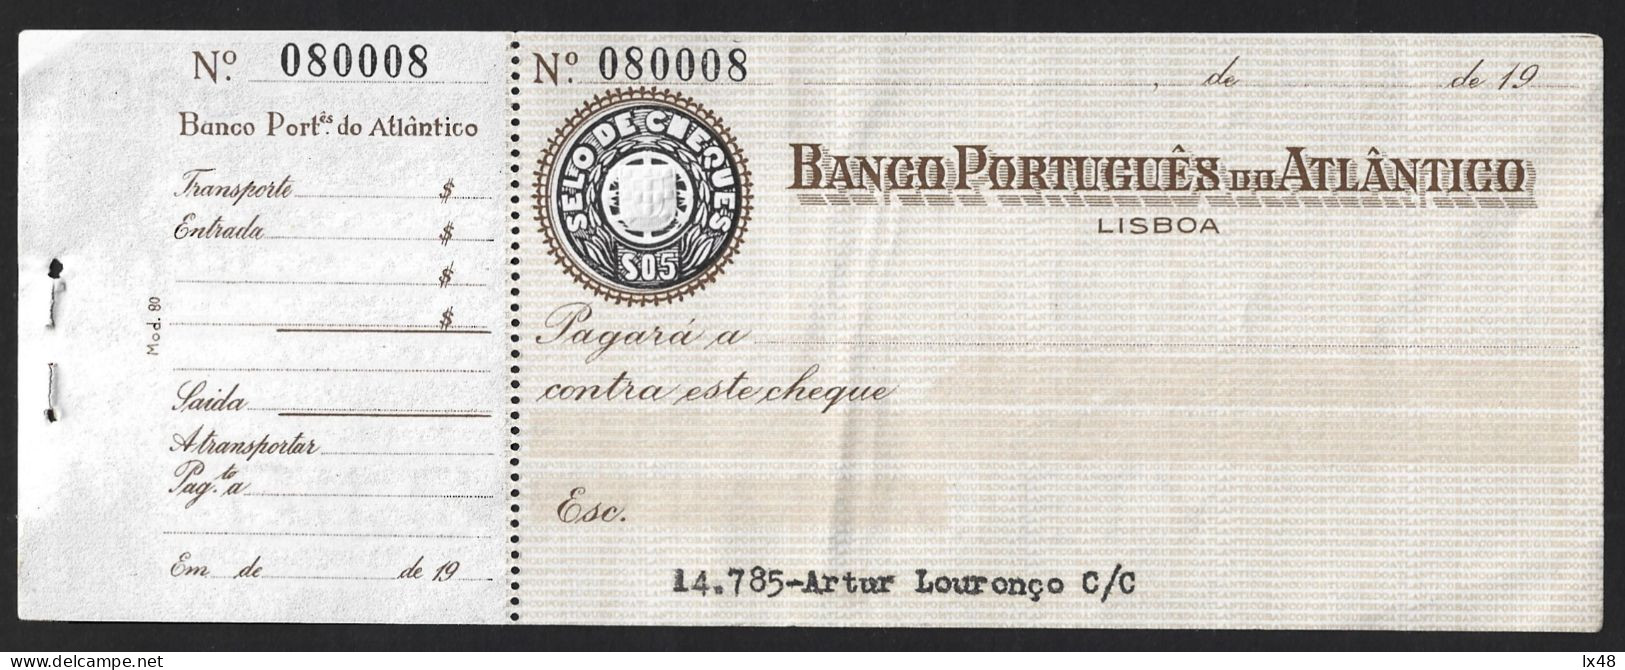 Check Banco Português Atlântico Lisbon. $05 Check Stamp With Offset Printing.Cheque BPA. Selo De Cheques $05 Com Impress - Chèques & Chèques De Voyage